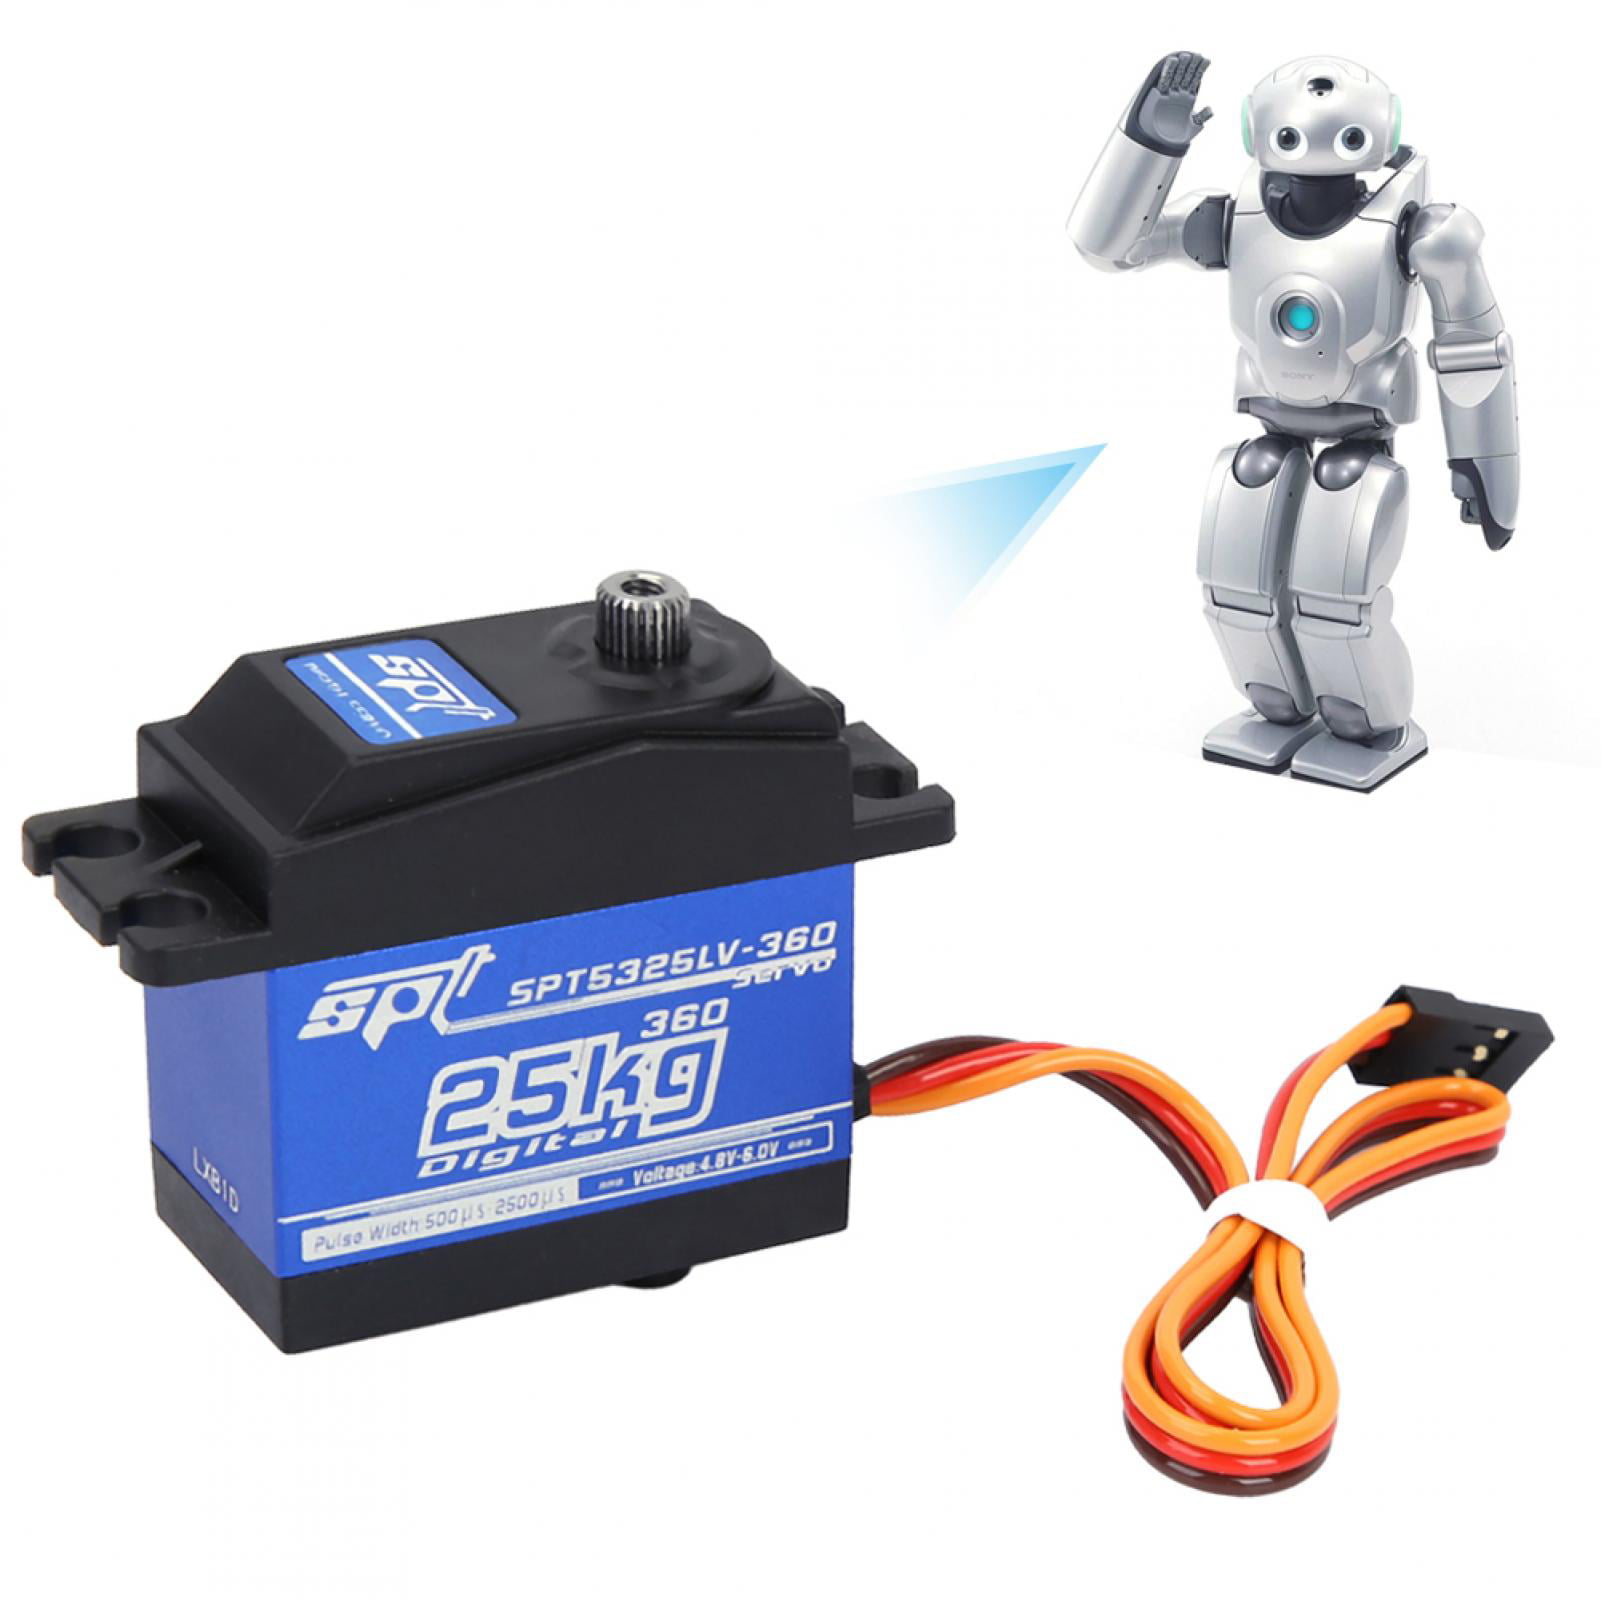 SPT5325LV-360 25KG Digital Servo 360 Continuous Rotation For RC Robot Accessory